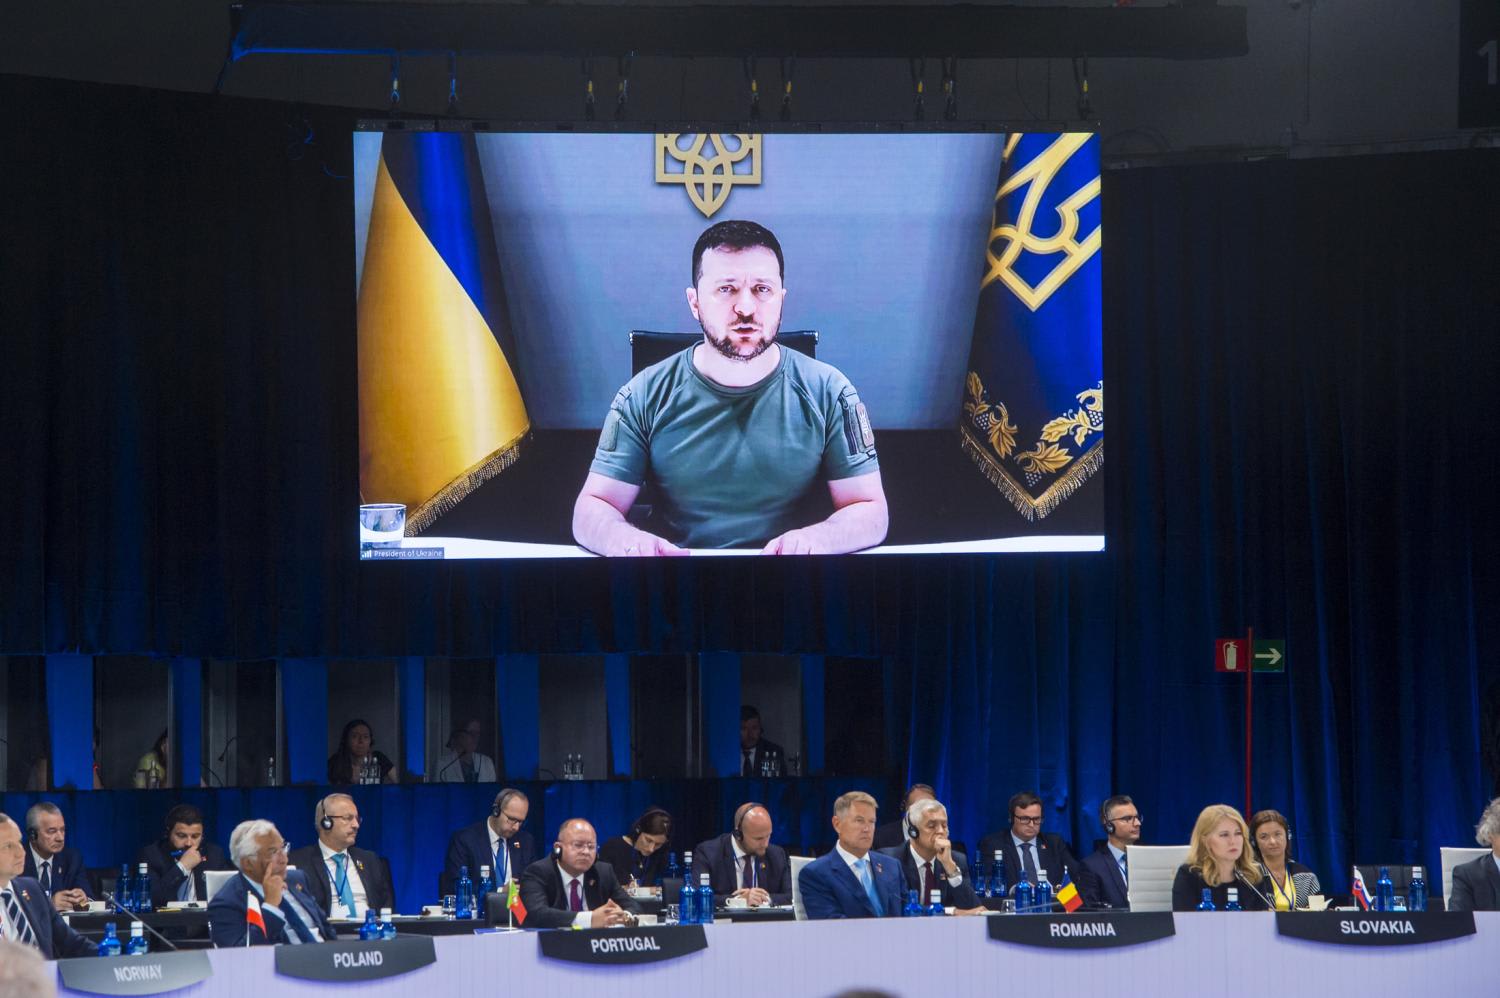 Ukraine President Volodymyr Zelenskyy video speech at Nato summit in Madrid, Spain, June 28, 2022.